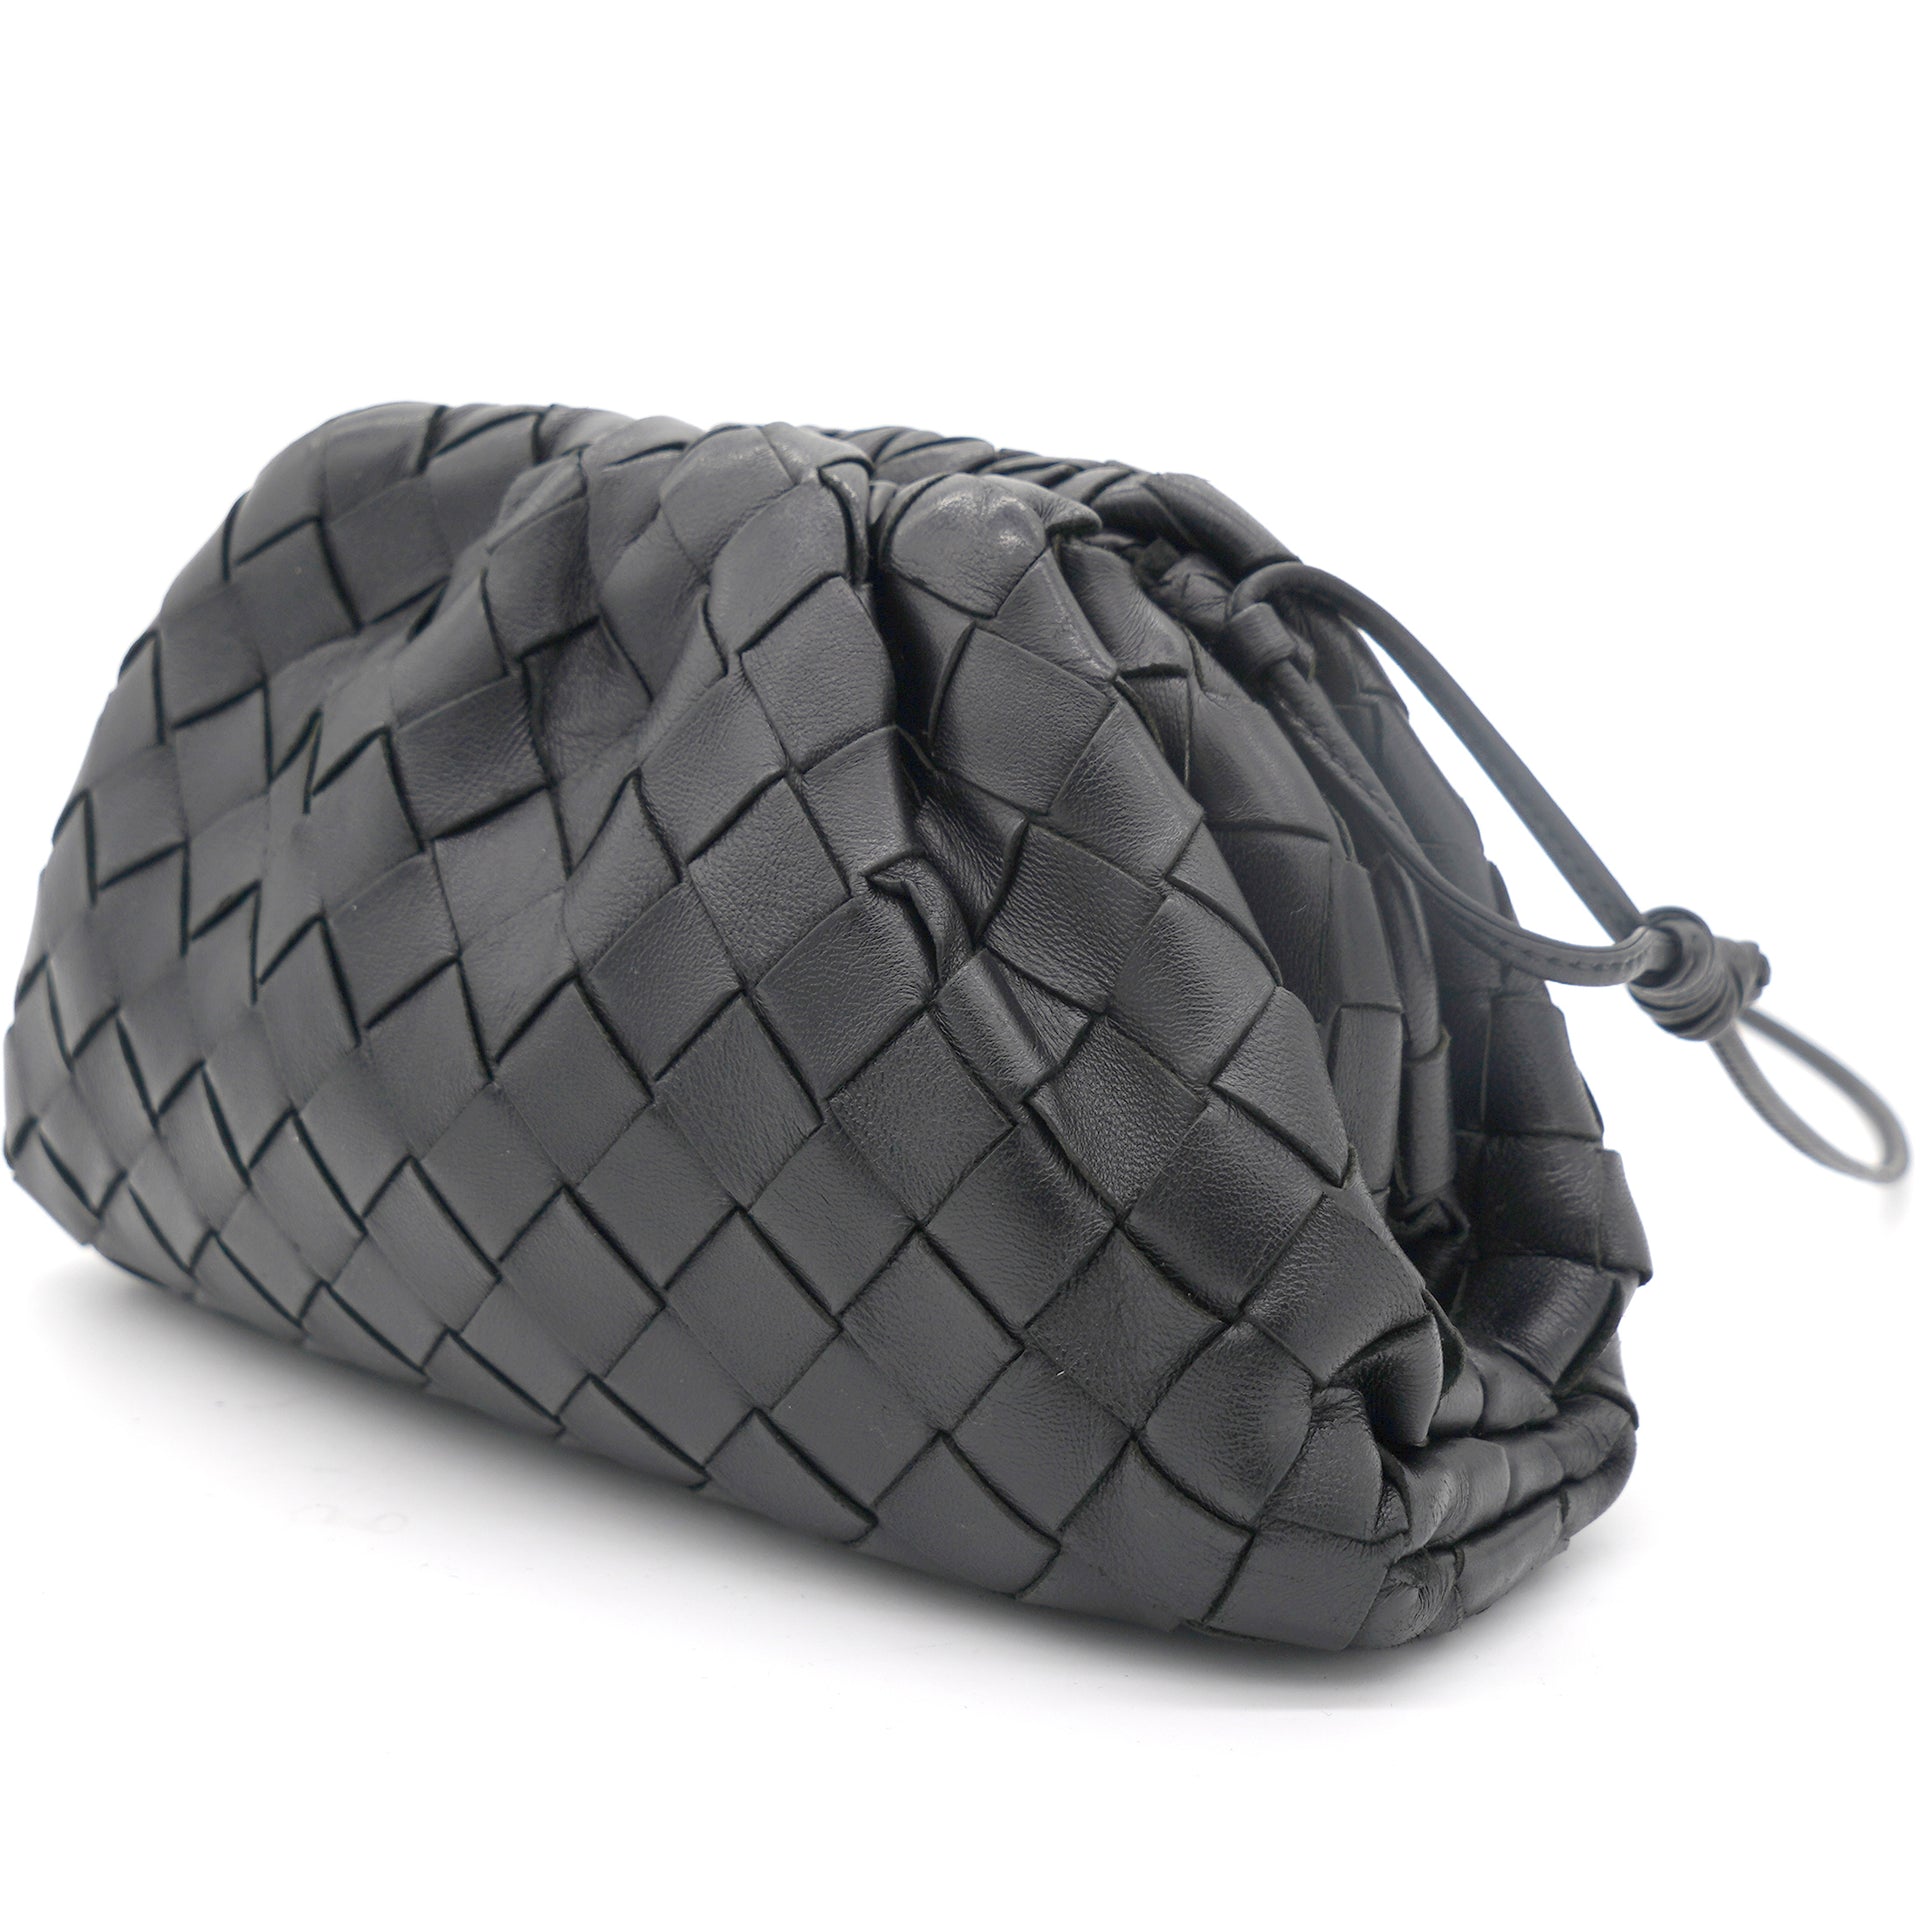 Black Bottega Veneta Intrecciato Clutch Bag